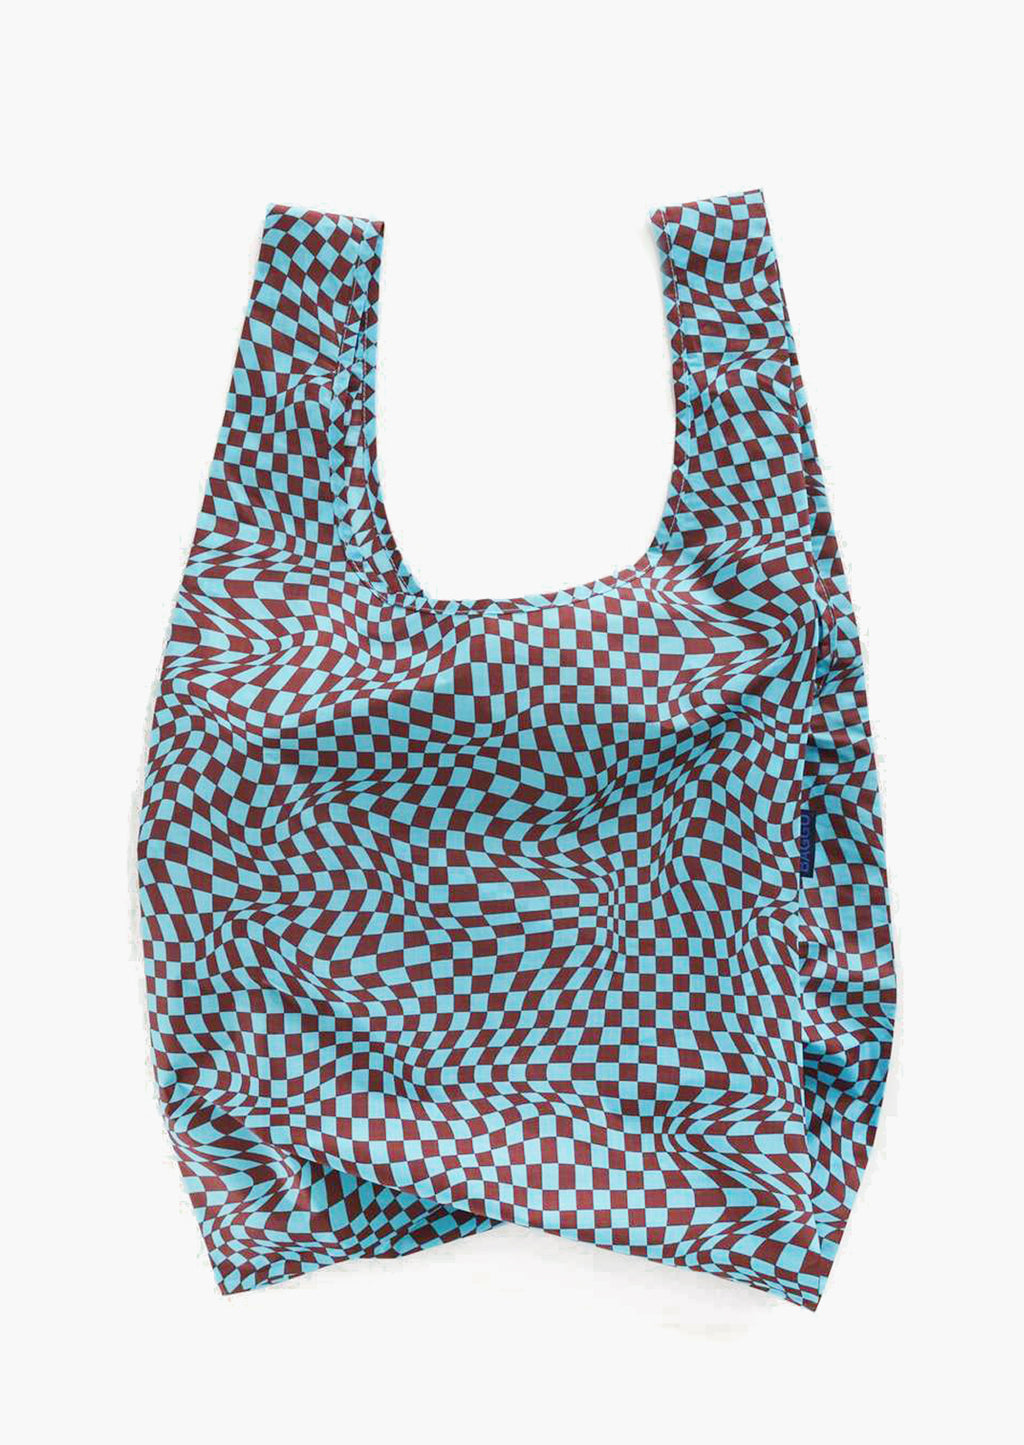 Sky Trippy Checker: A reusuable standard Baggu bag in blue trippy checker print.